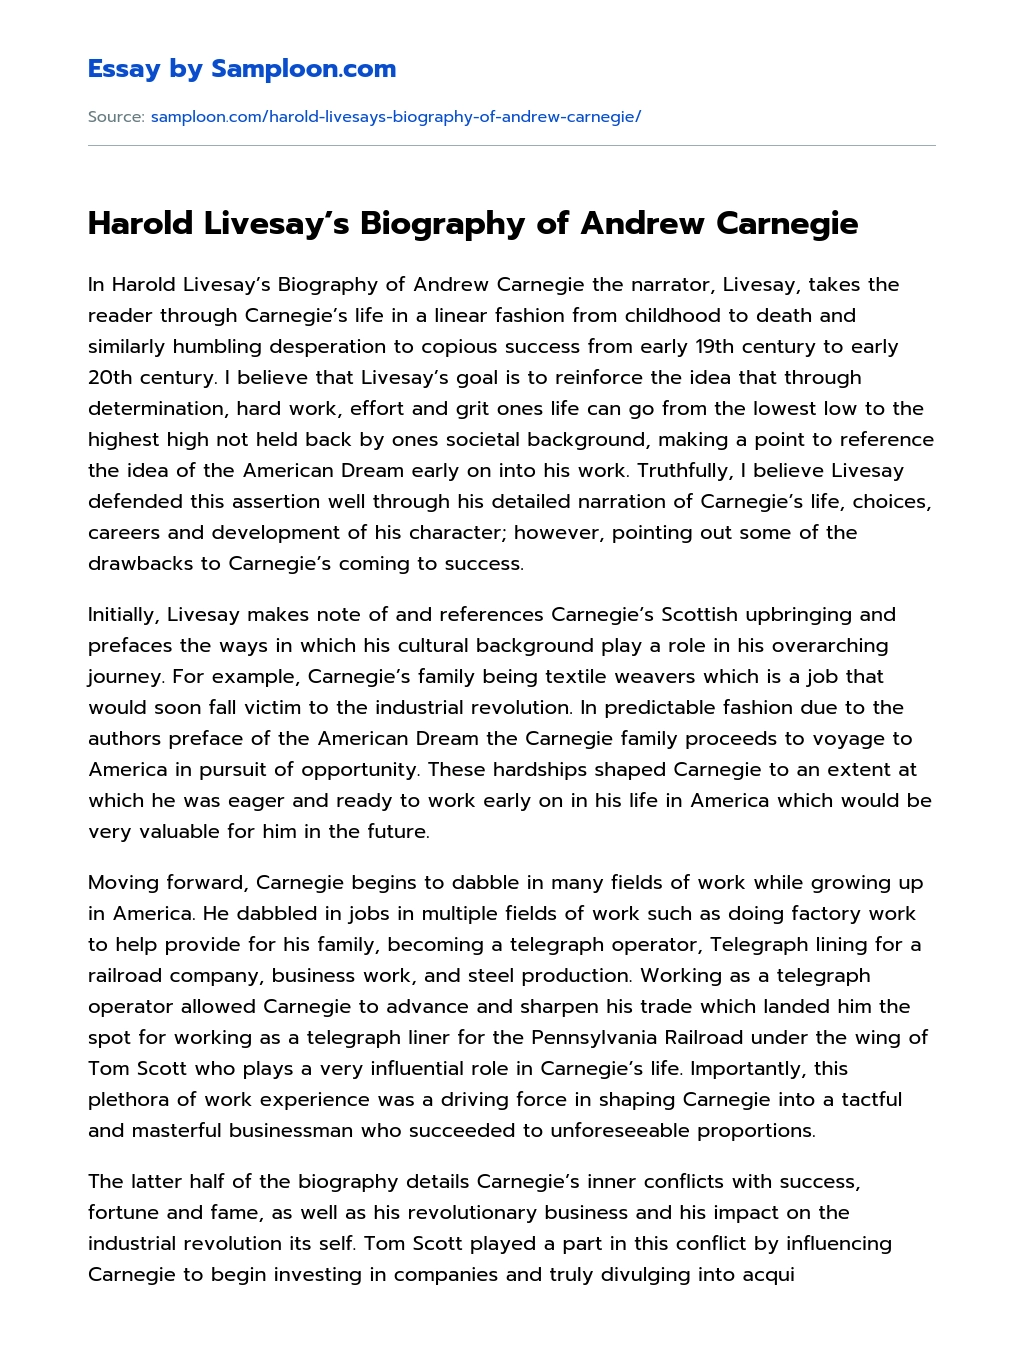 Harold Livesay’s Biography of Andrew Carnegie essay